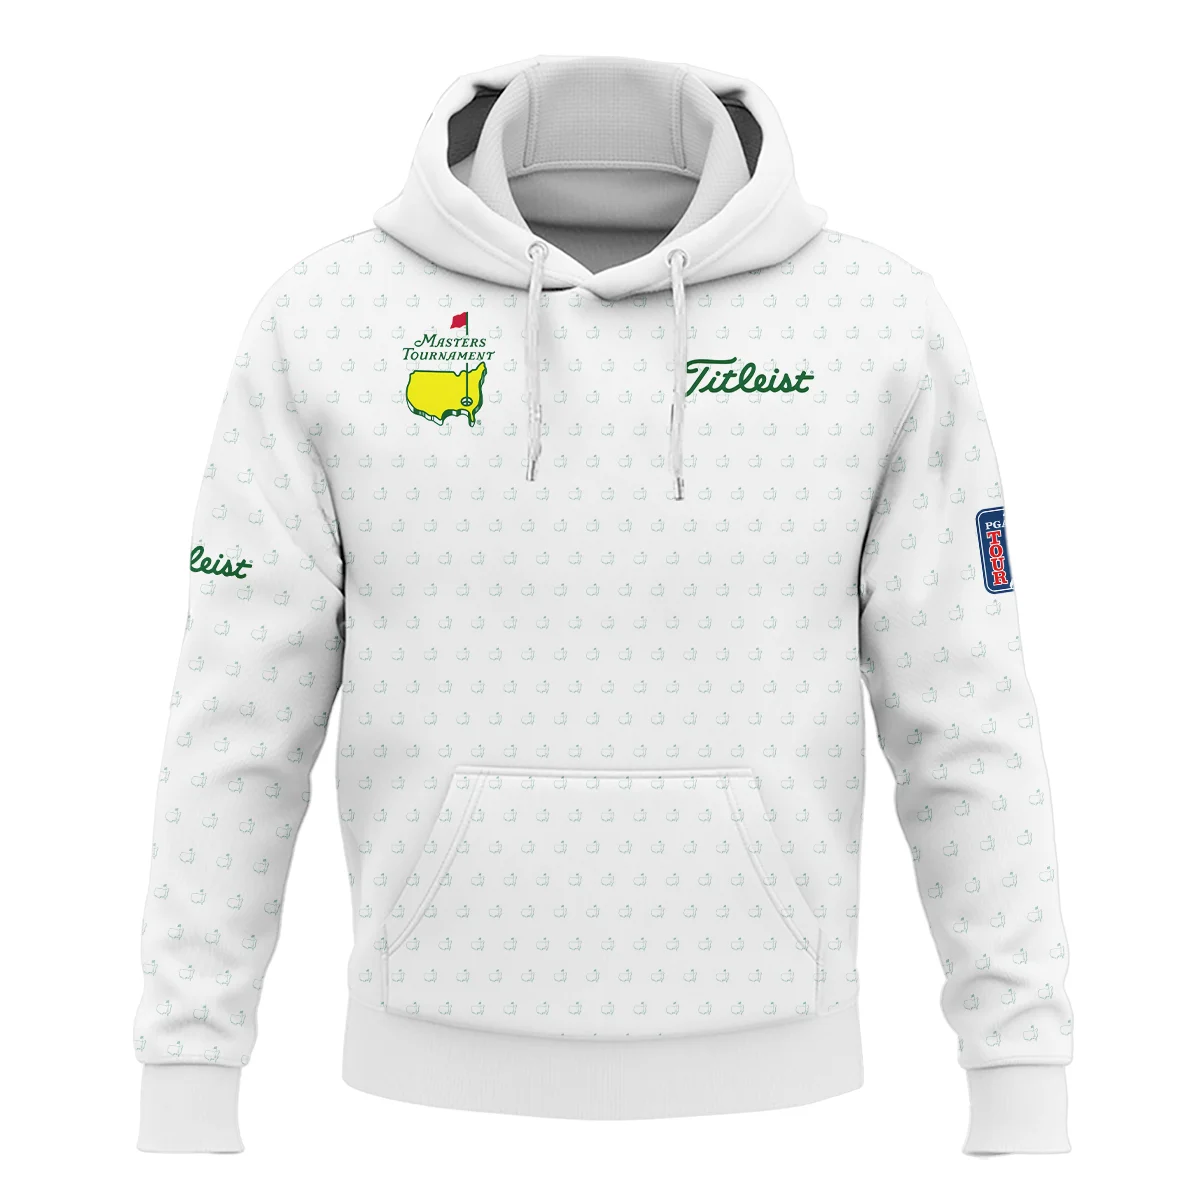 Golf Sport Masters Tournament Titleist Polo Shirt Sports Logo Pattern White Green Polo Shirt For Men